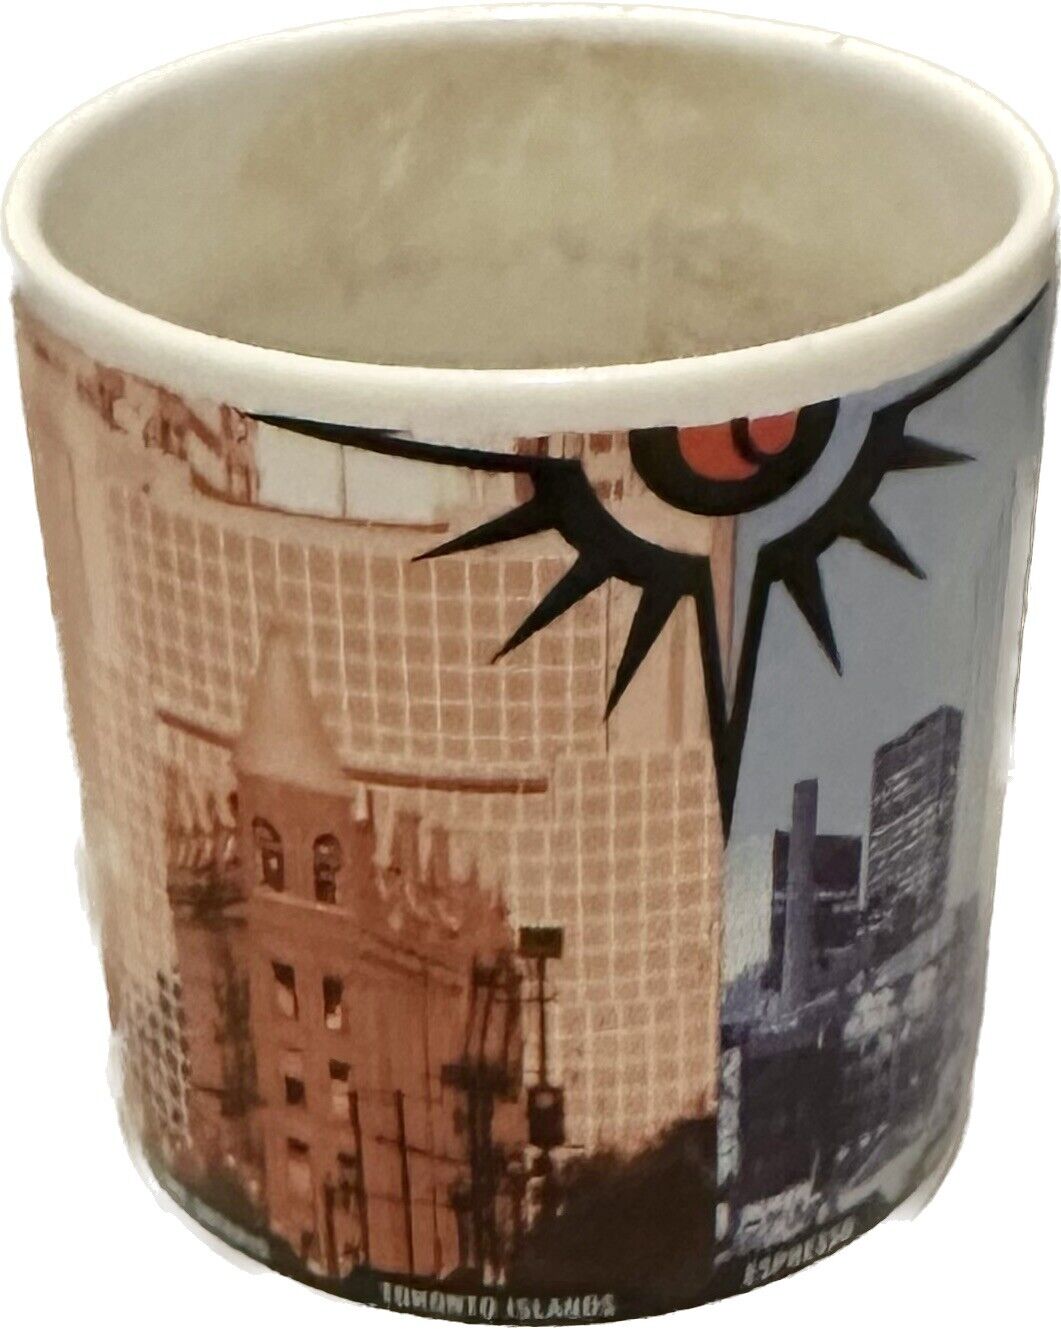 Starbucks 1999 Toronto Canada Ceramic Coffee Tea Mug Cup Collectible City Mug 16